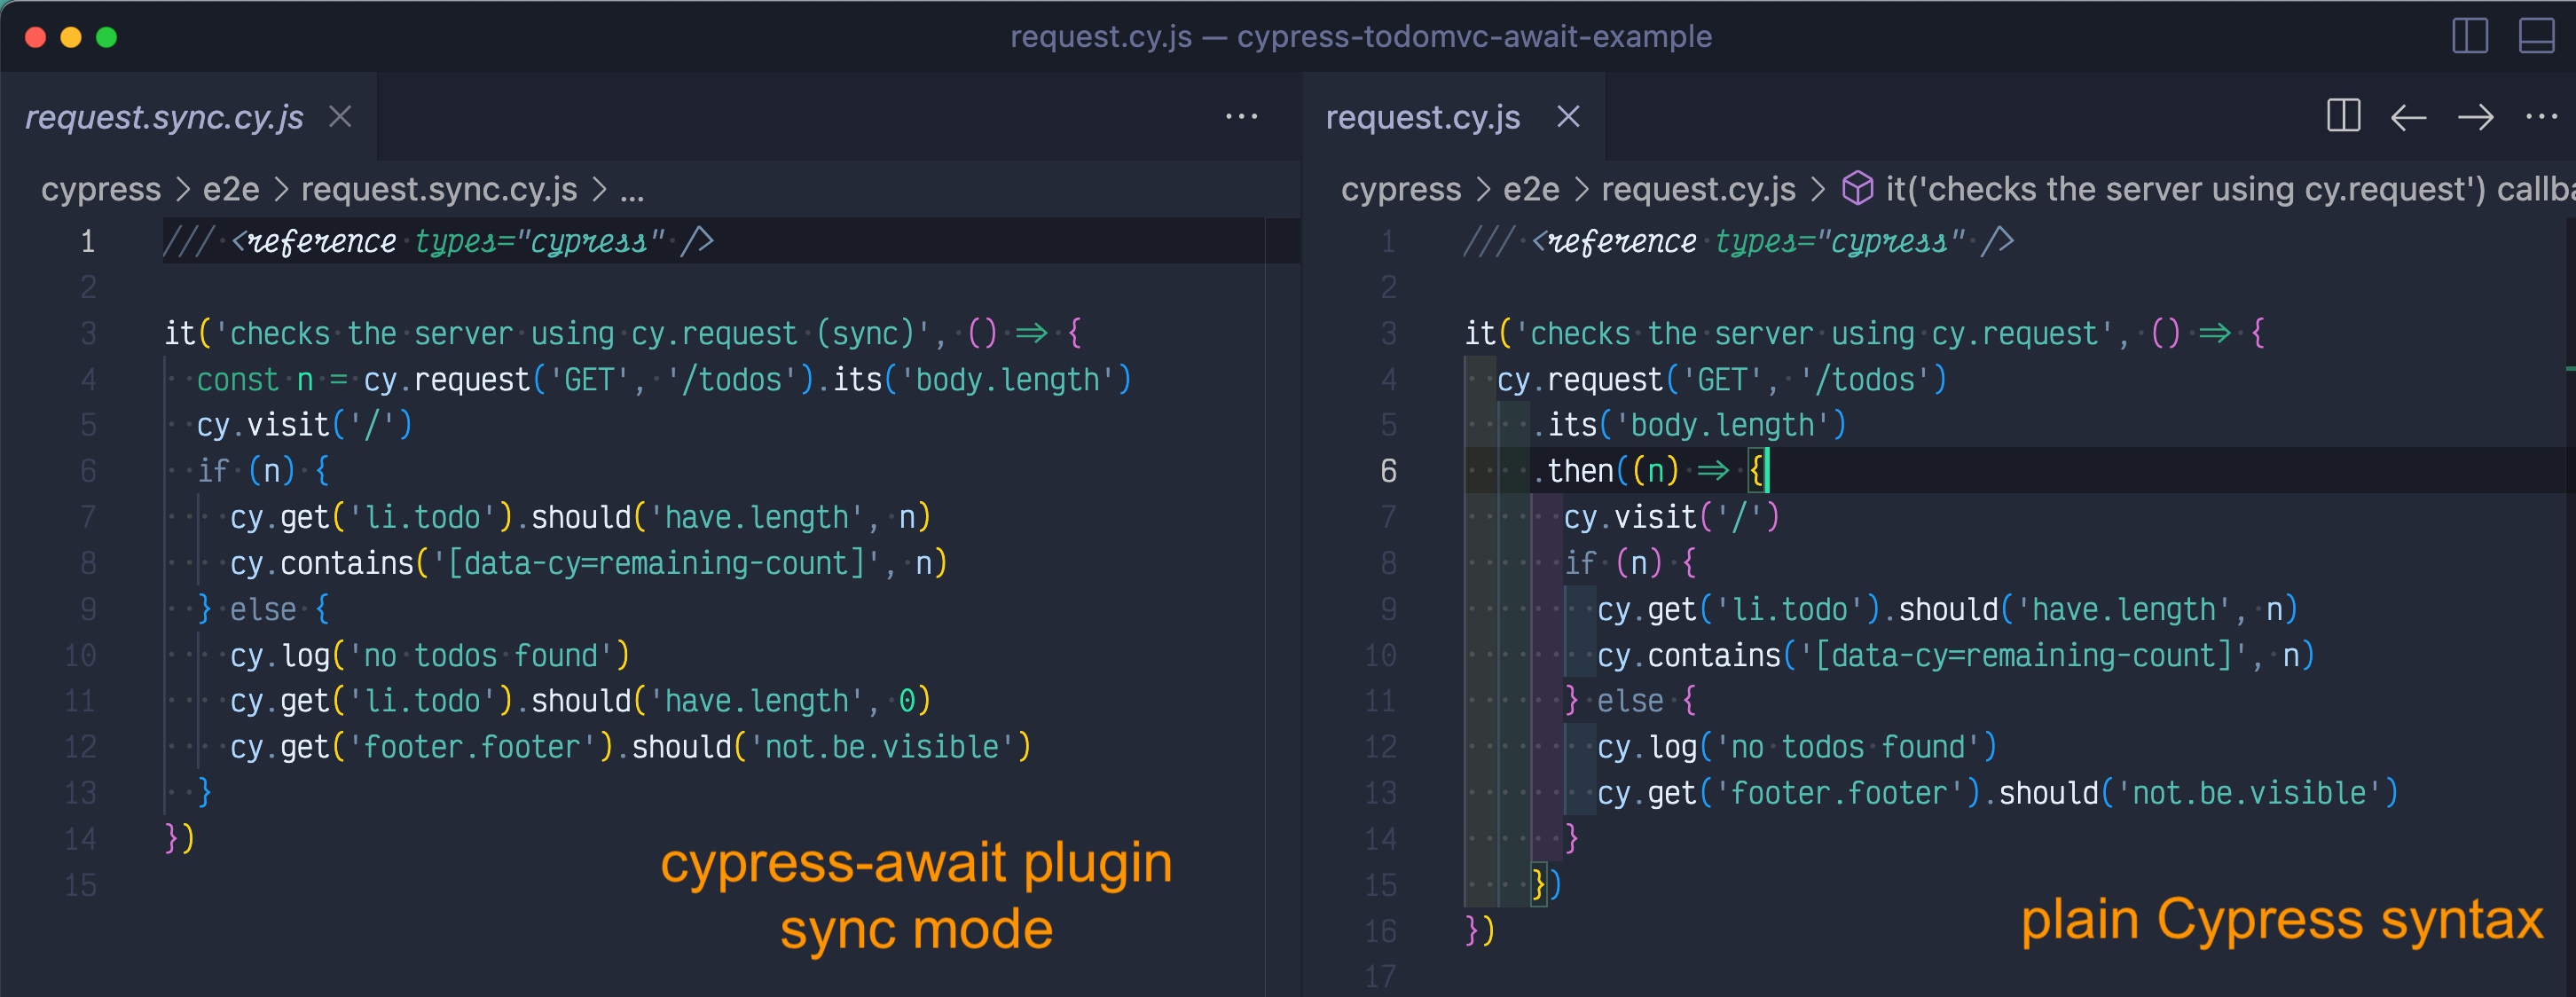 cypress-await vs plain Cypres syntax